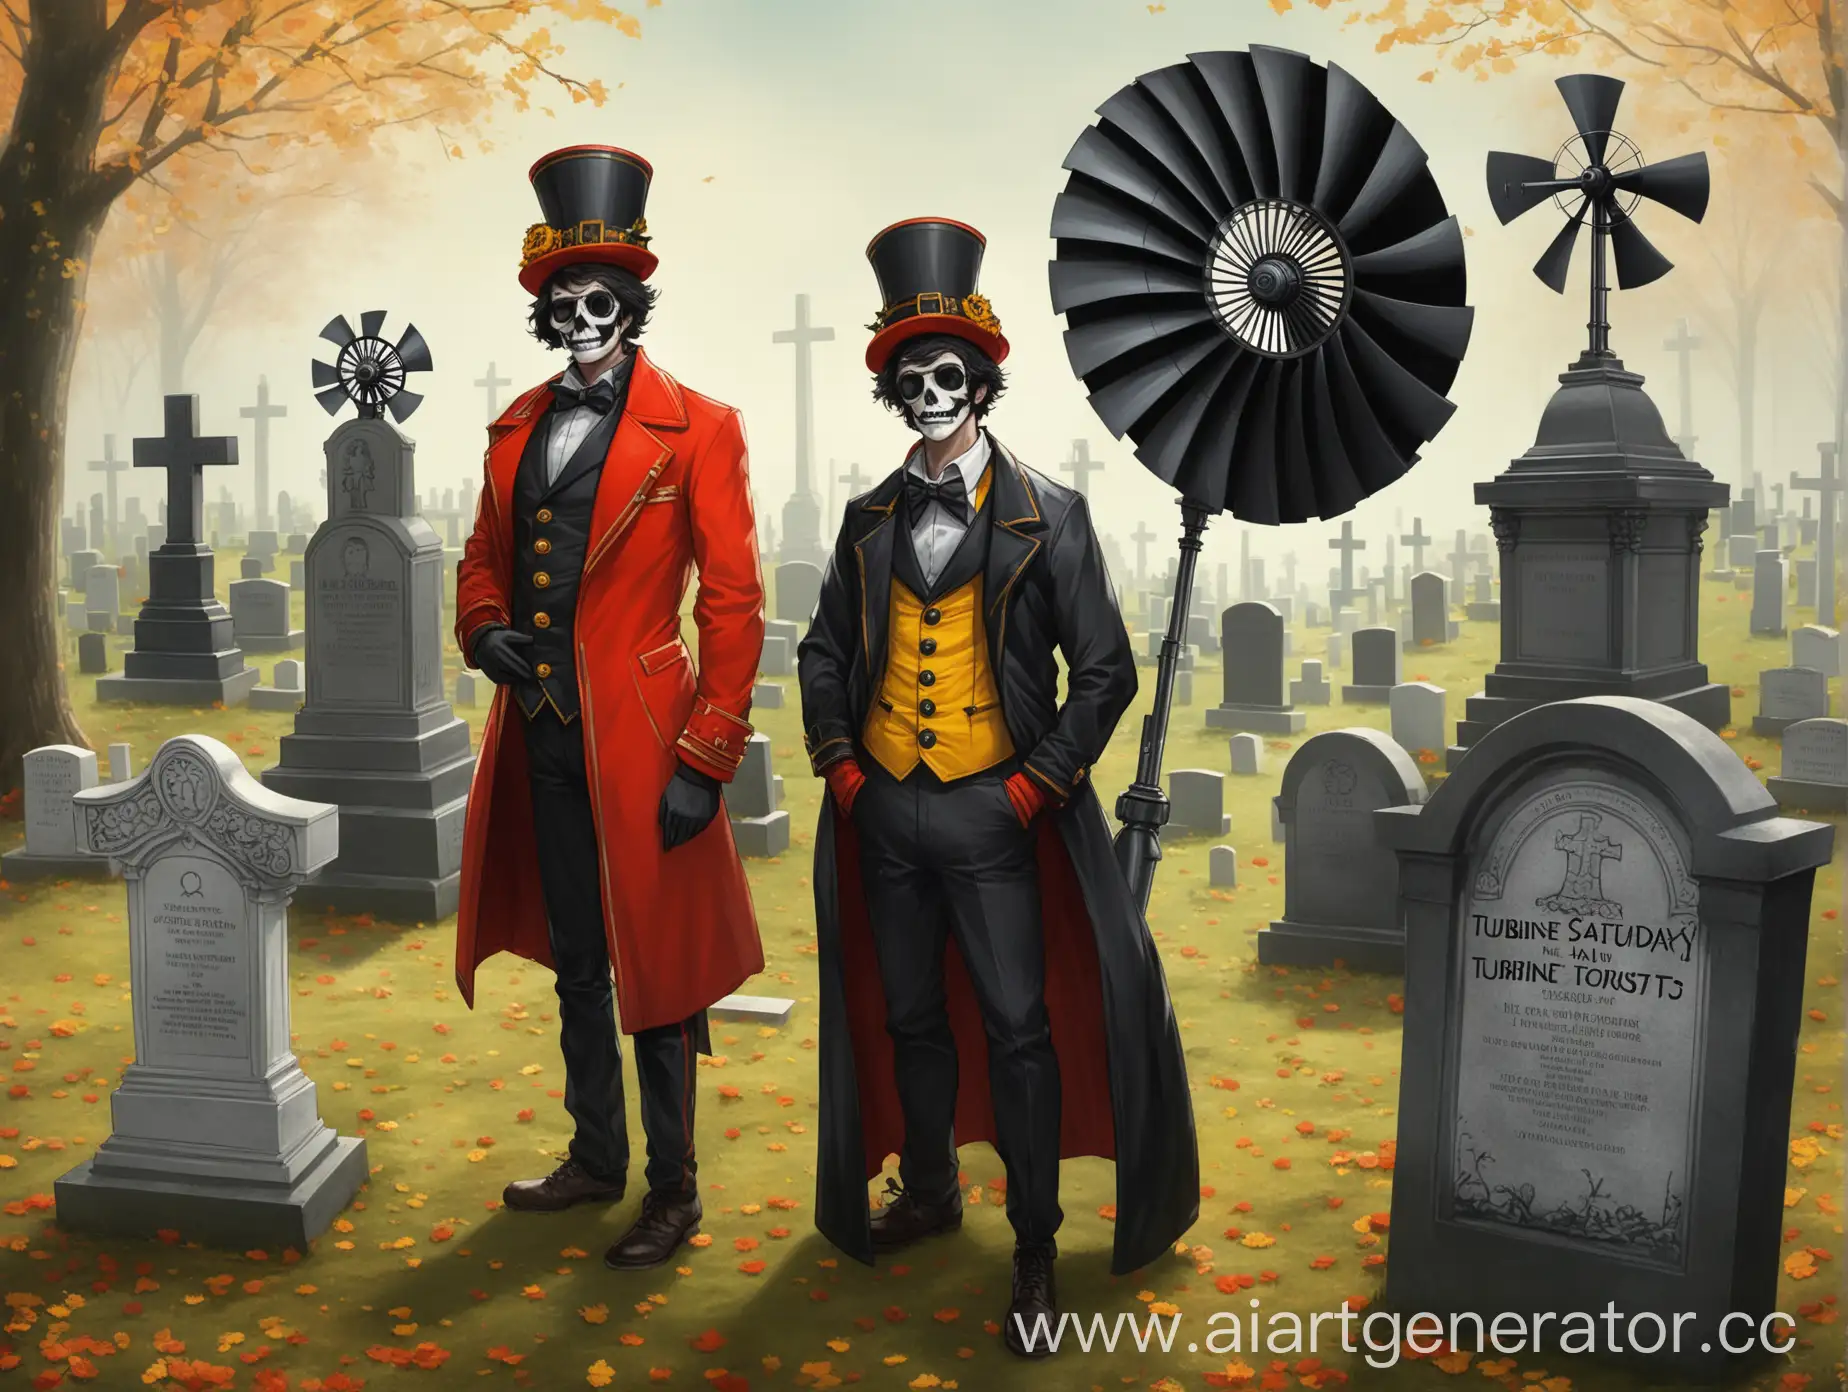 Турбинотелые туристы в костюме Барона субботы, на кладбище у могилы Самди